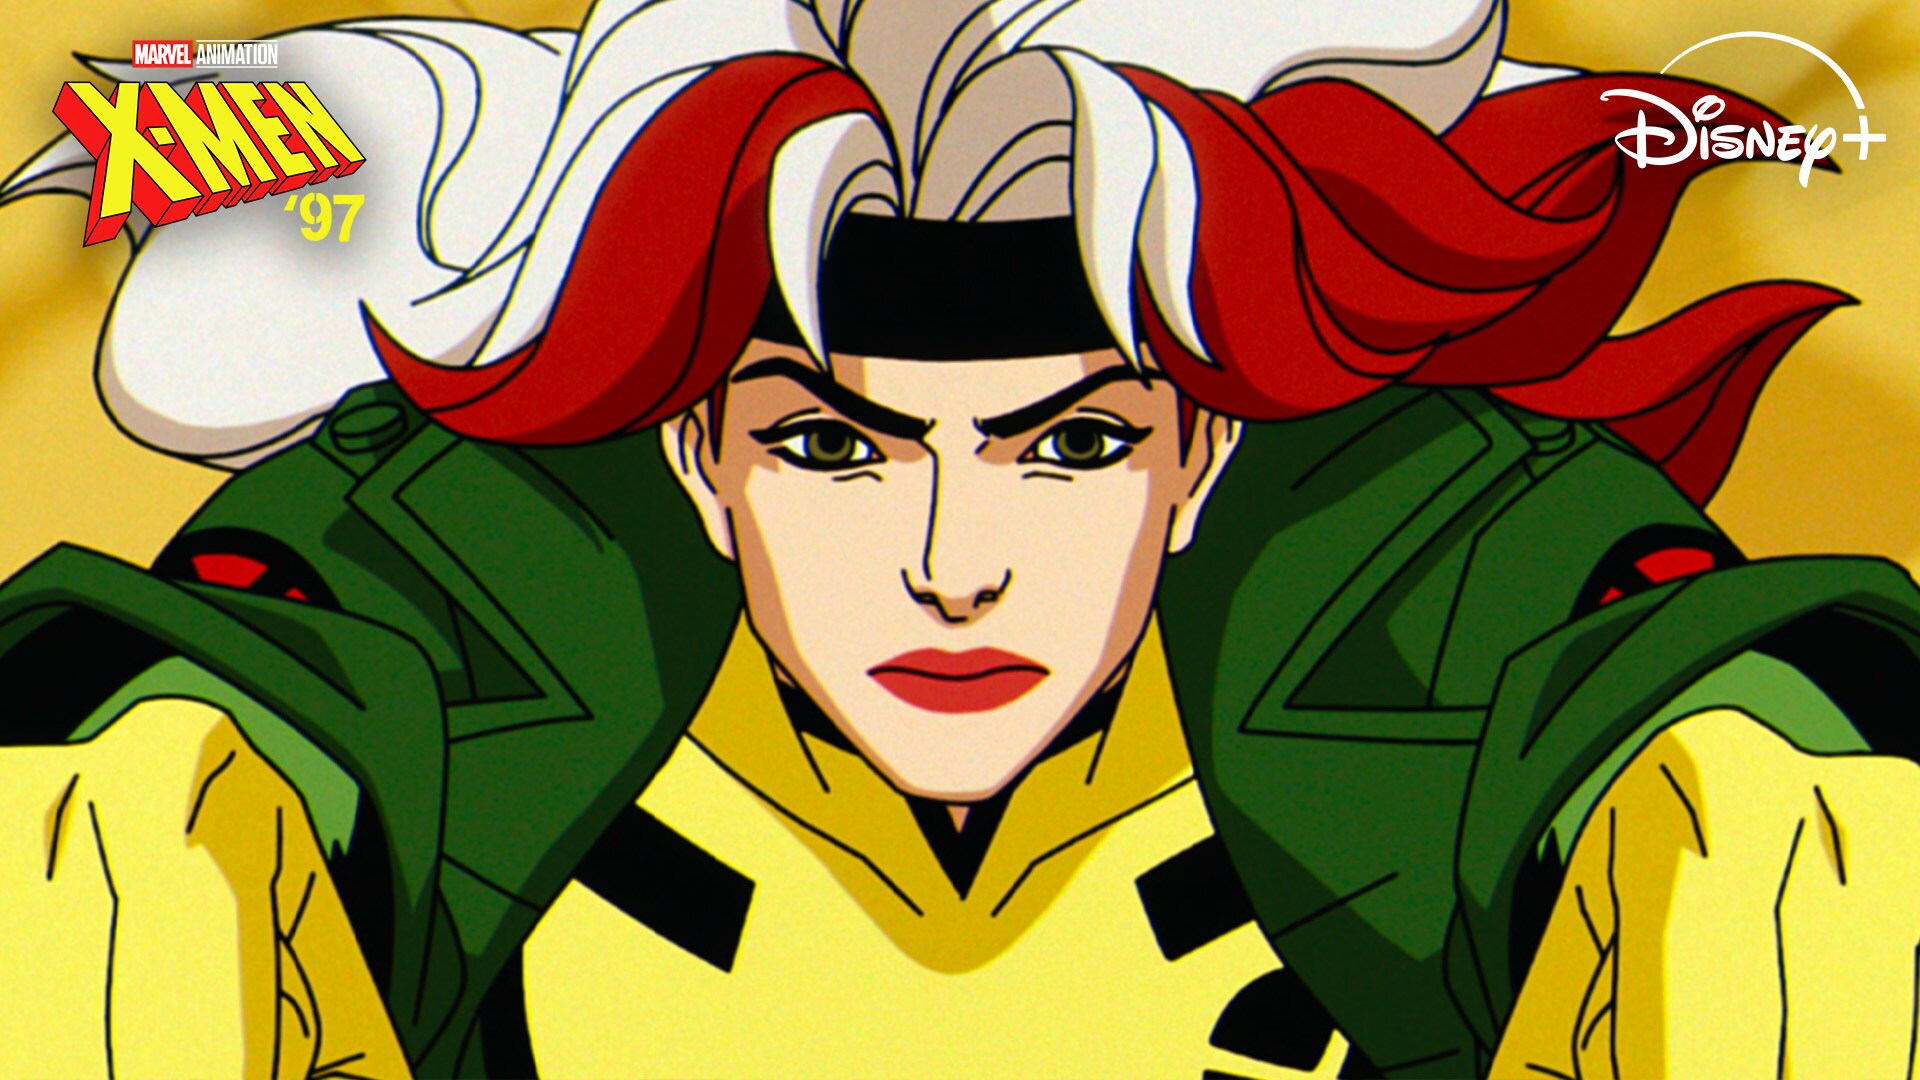 Marvel Animation's X-Men '97 | Change | Disney+